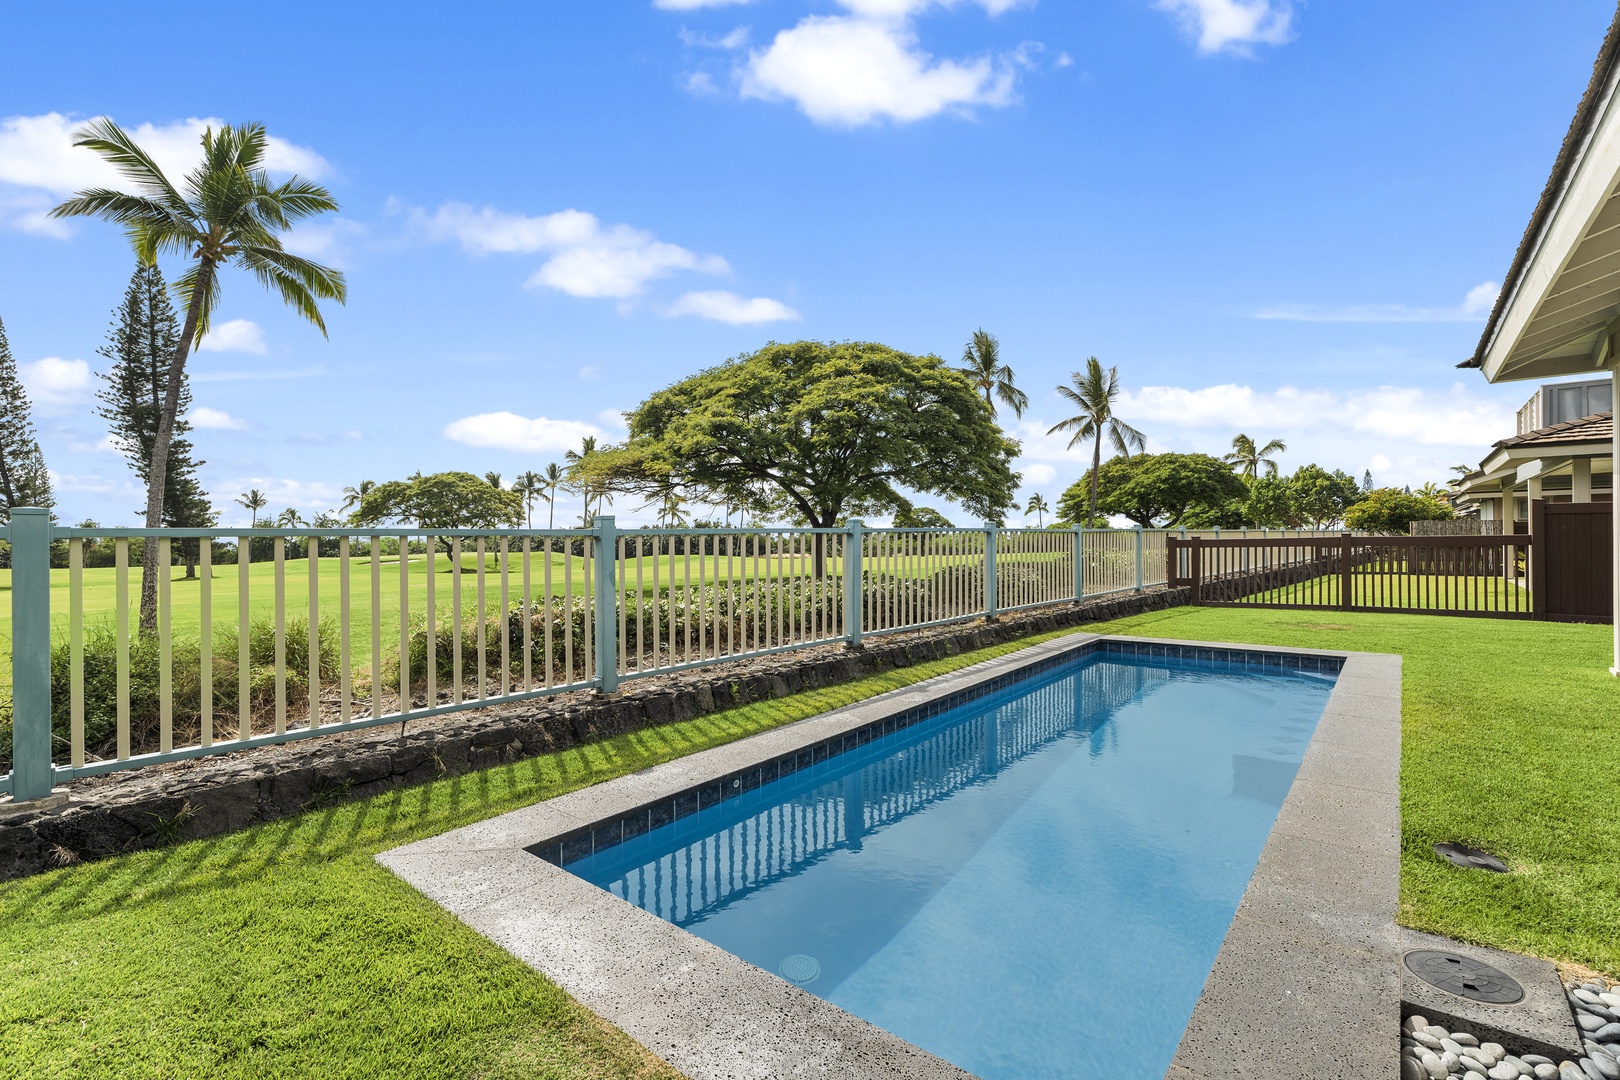 Kailua-Kona Vacation Rentals, Holua Kai #8 - Private pool